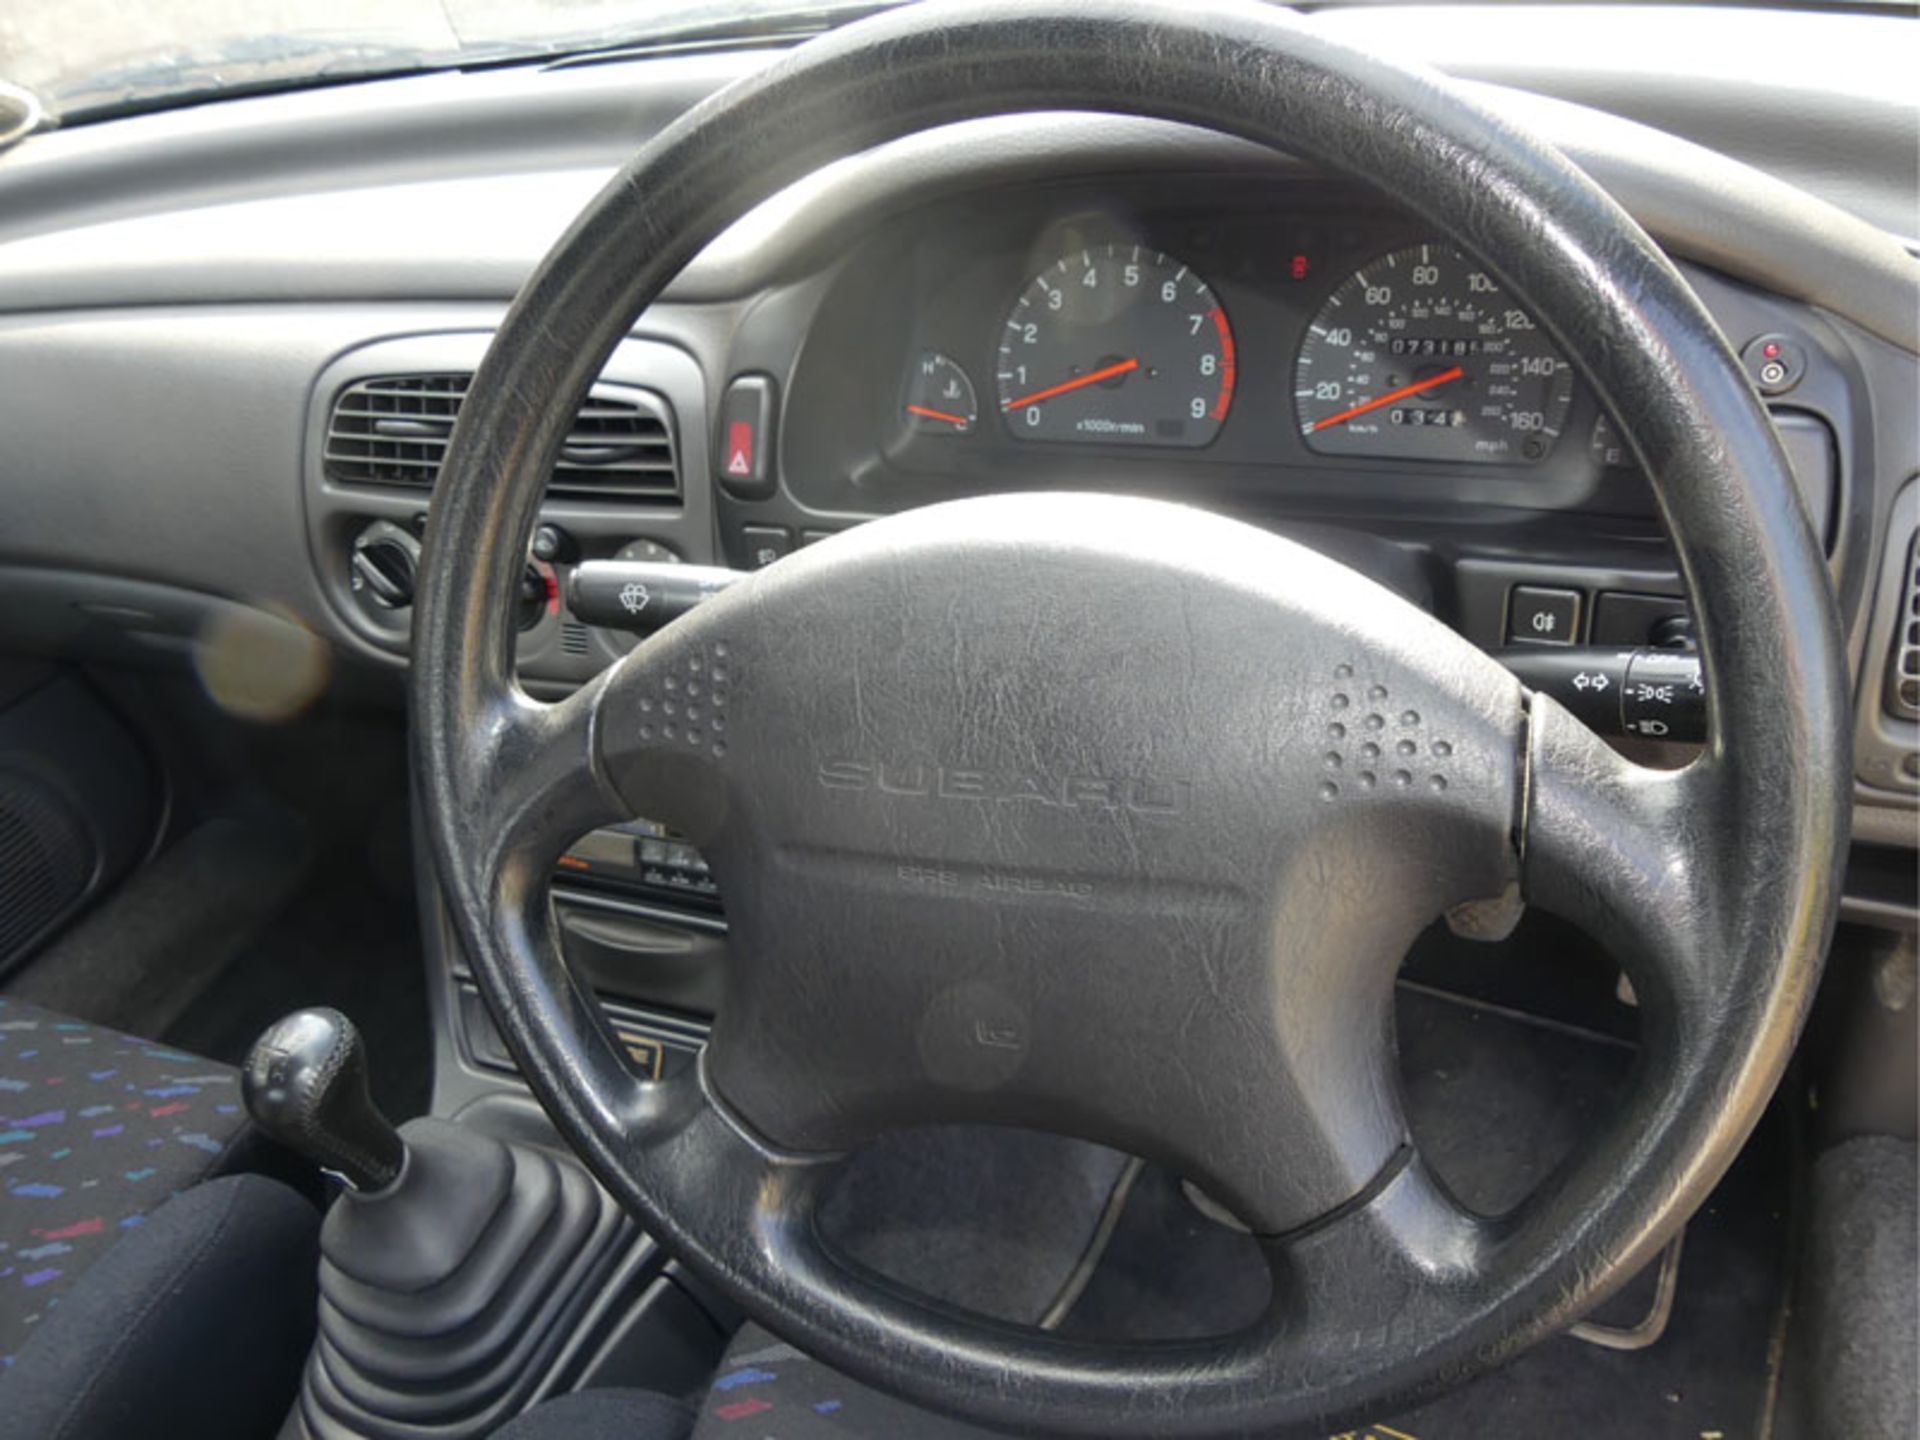 1995 Subaru Impreza Series McRae - Image 4 of 8